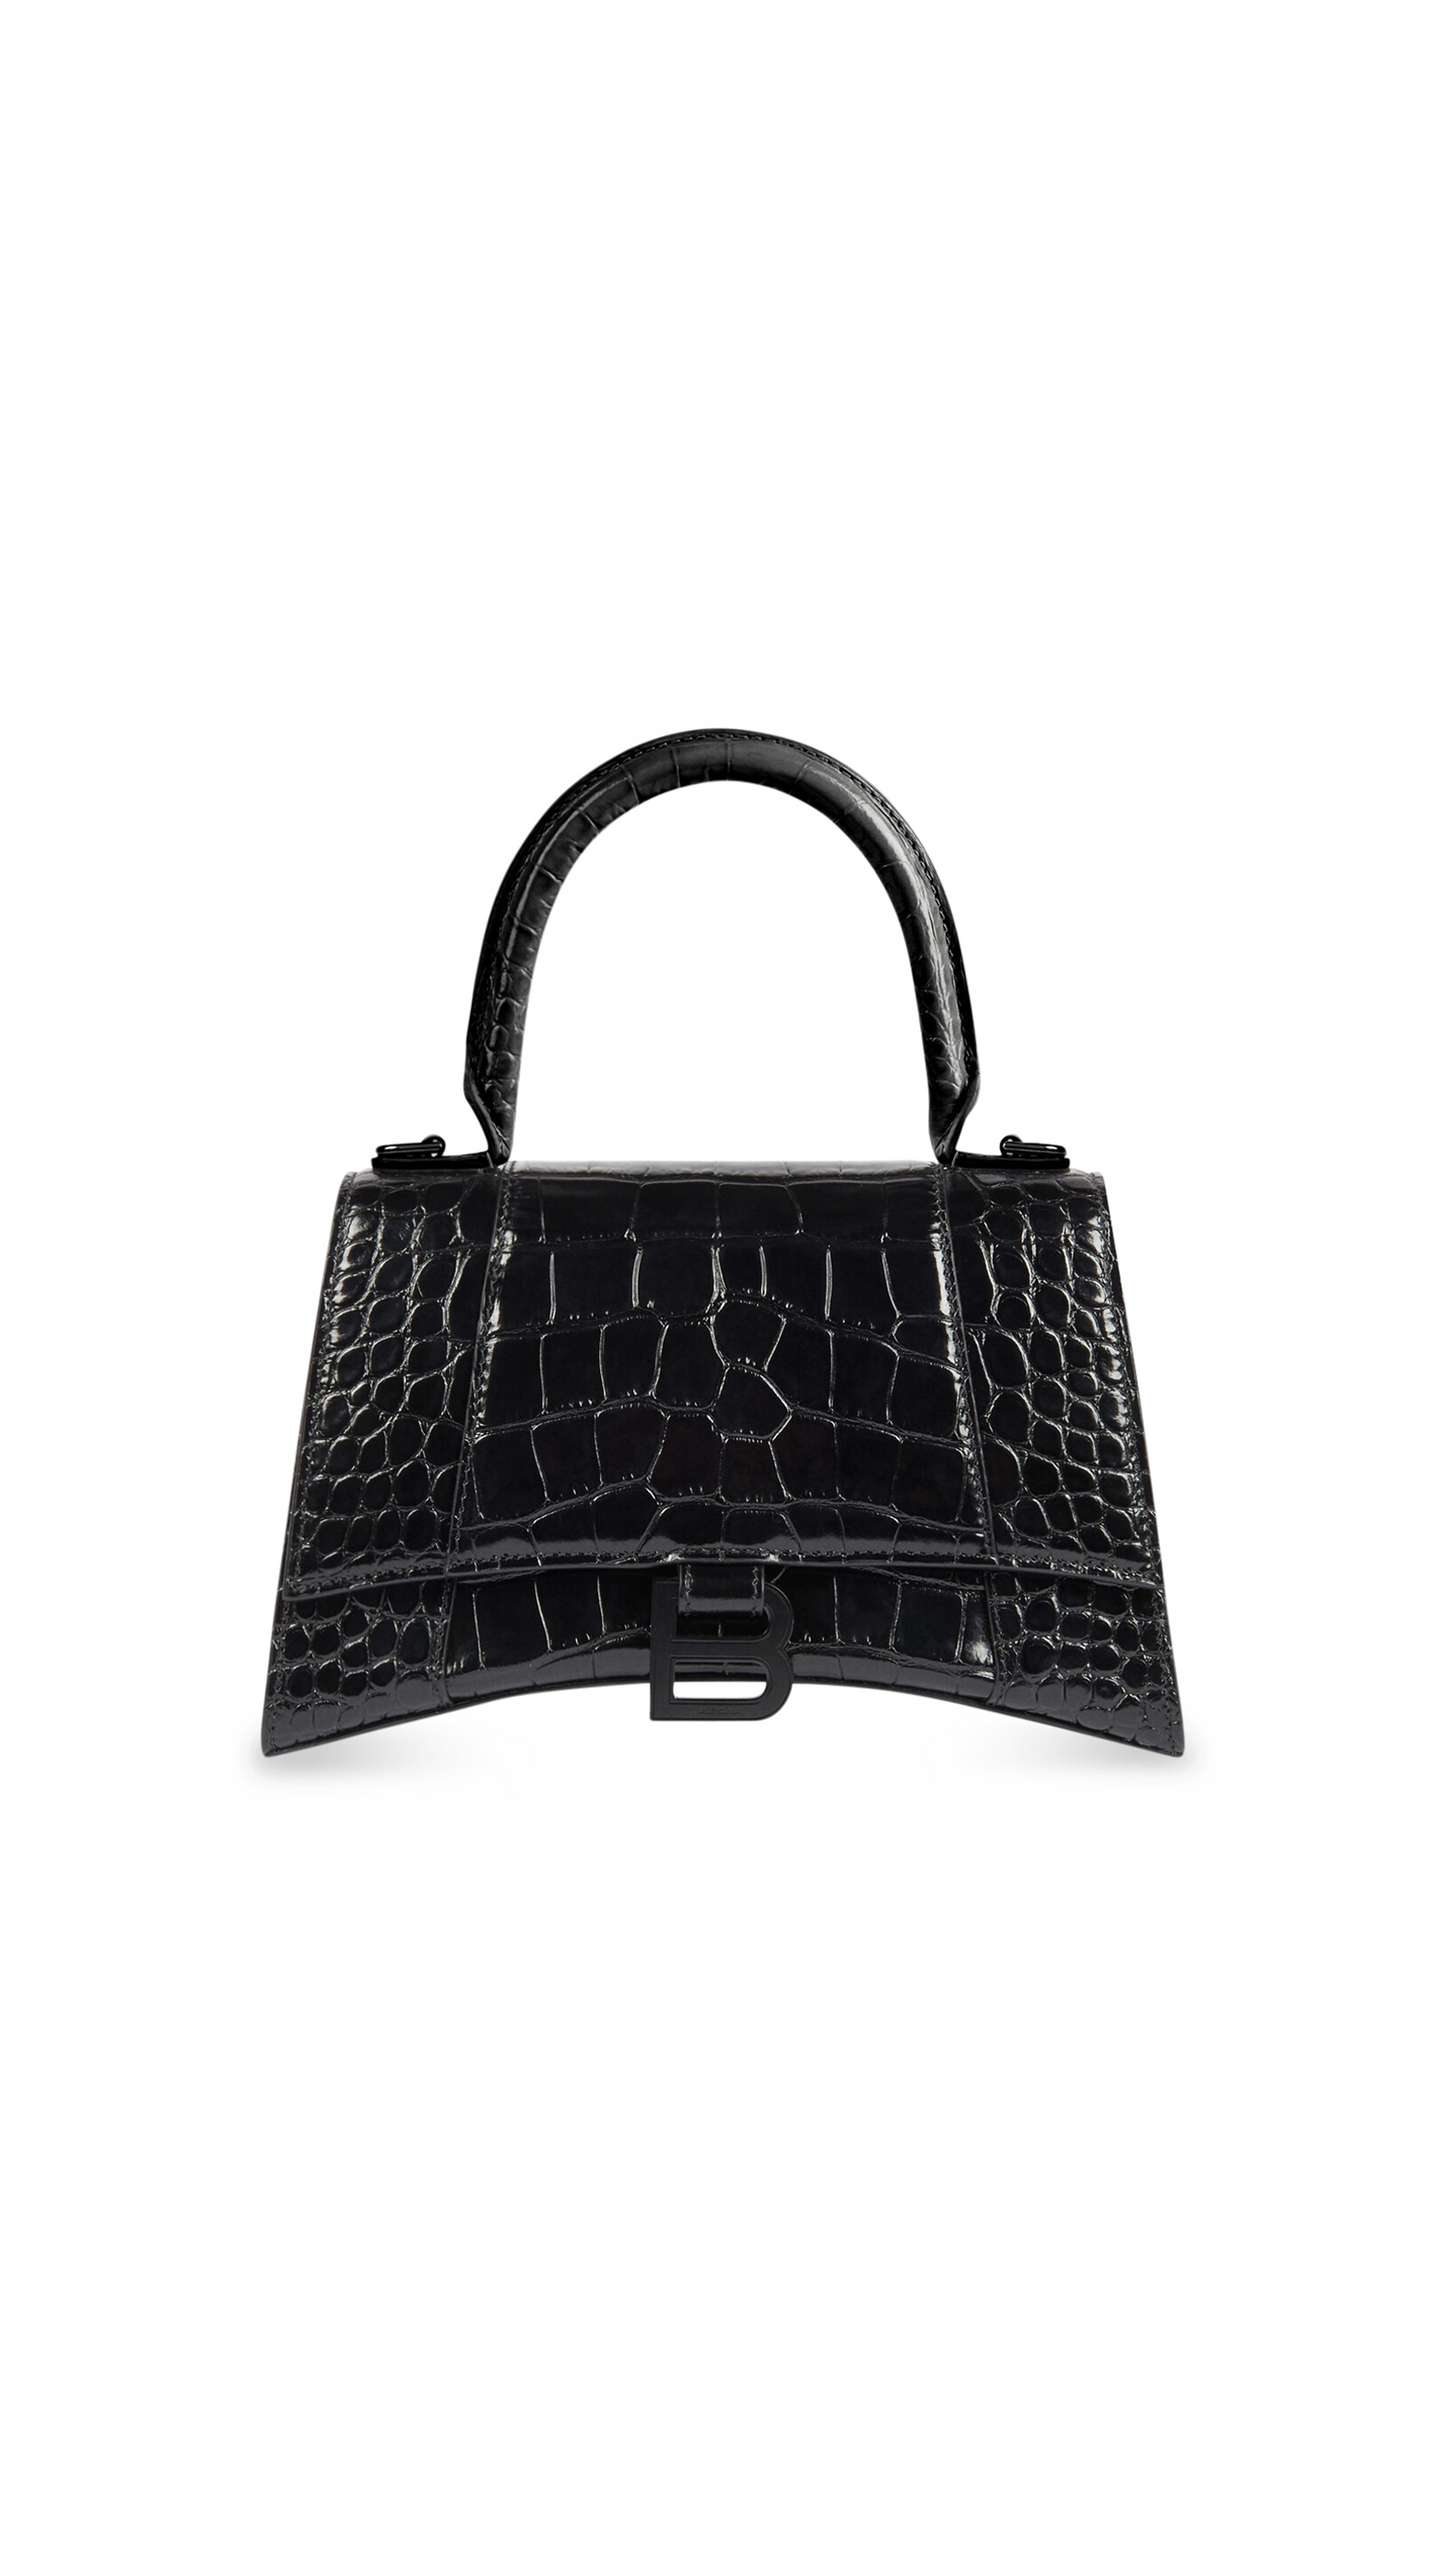 Hourglass Small Handbag in Shiny Crocodile Calfskin - Black.